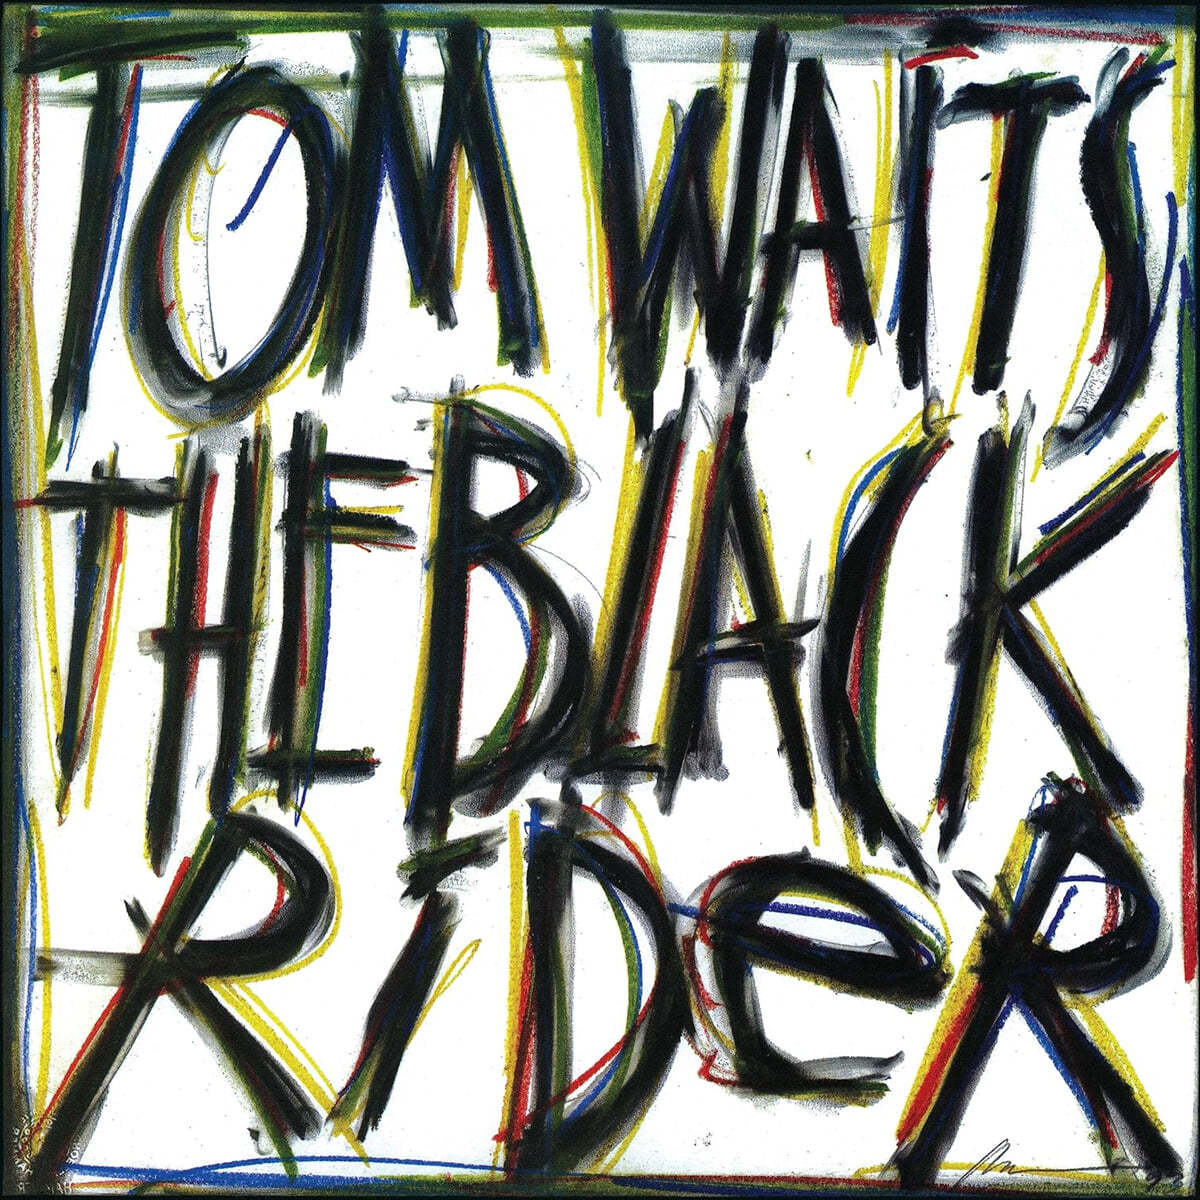 Tom Waits (톰 웨이츠) - The Black Rider 